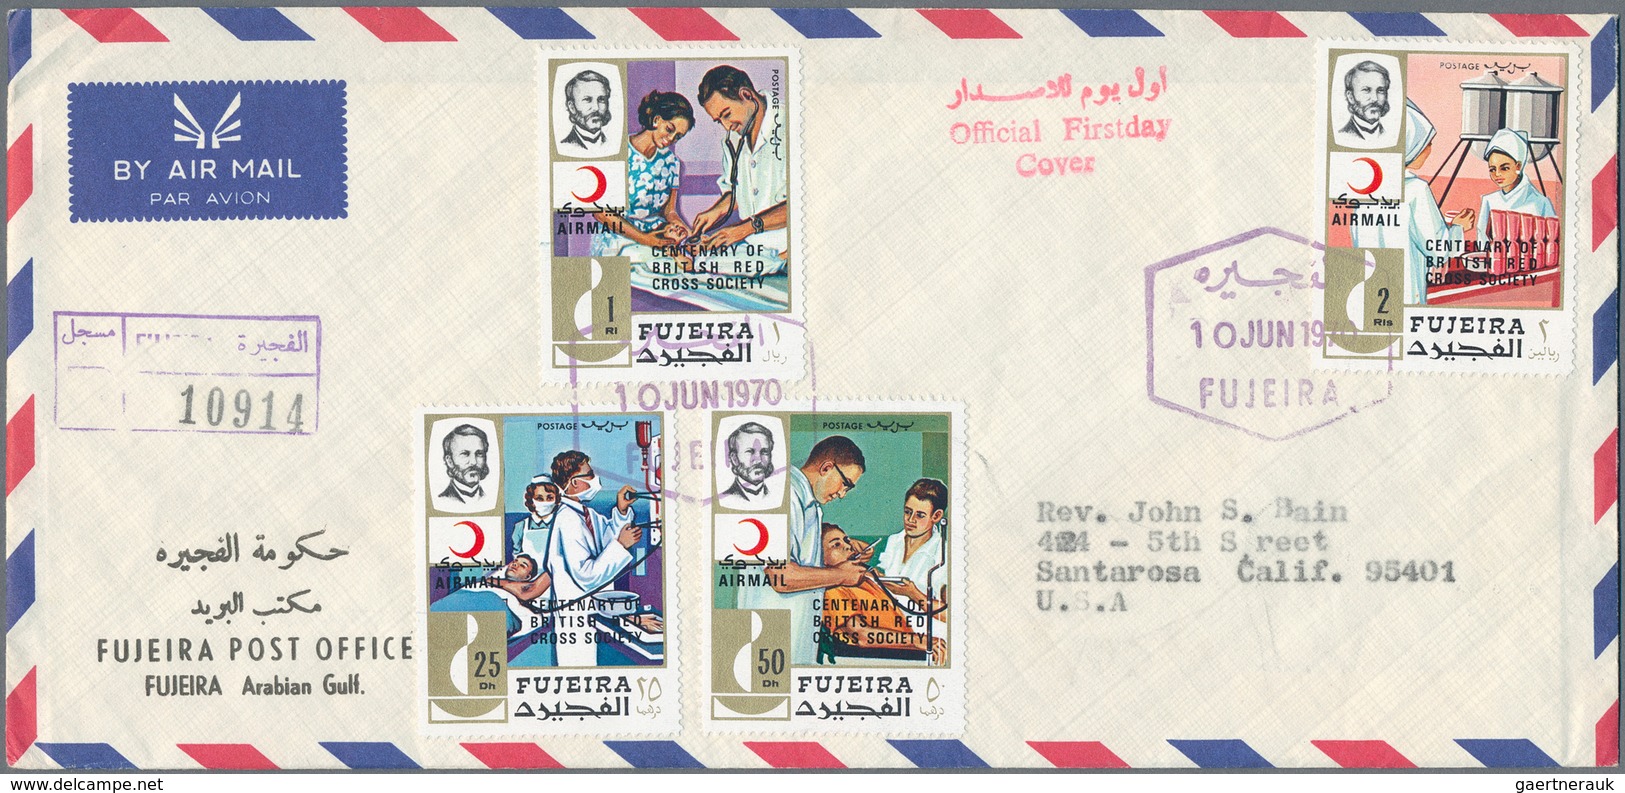 Umm al Qaiwain: 1963/71, real used covers/unadressed FDC of: Umm al Quiwain (6/2), Sharja (1/2), Fuj